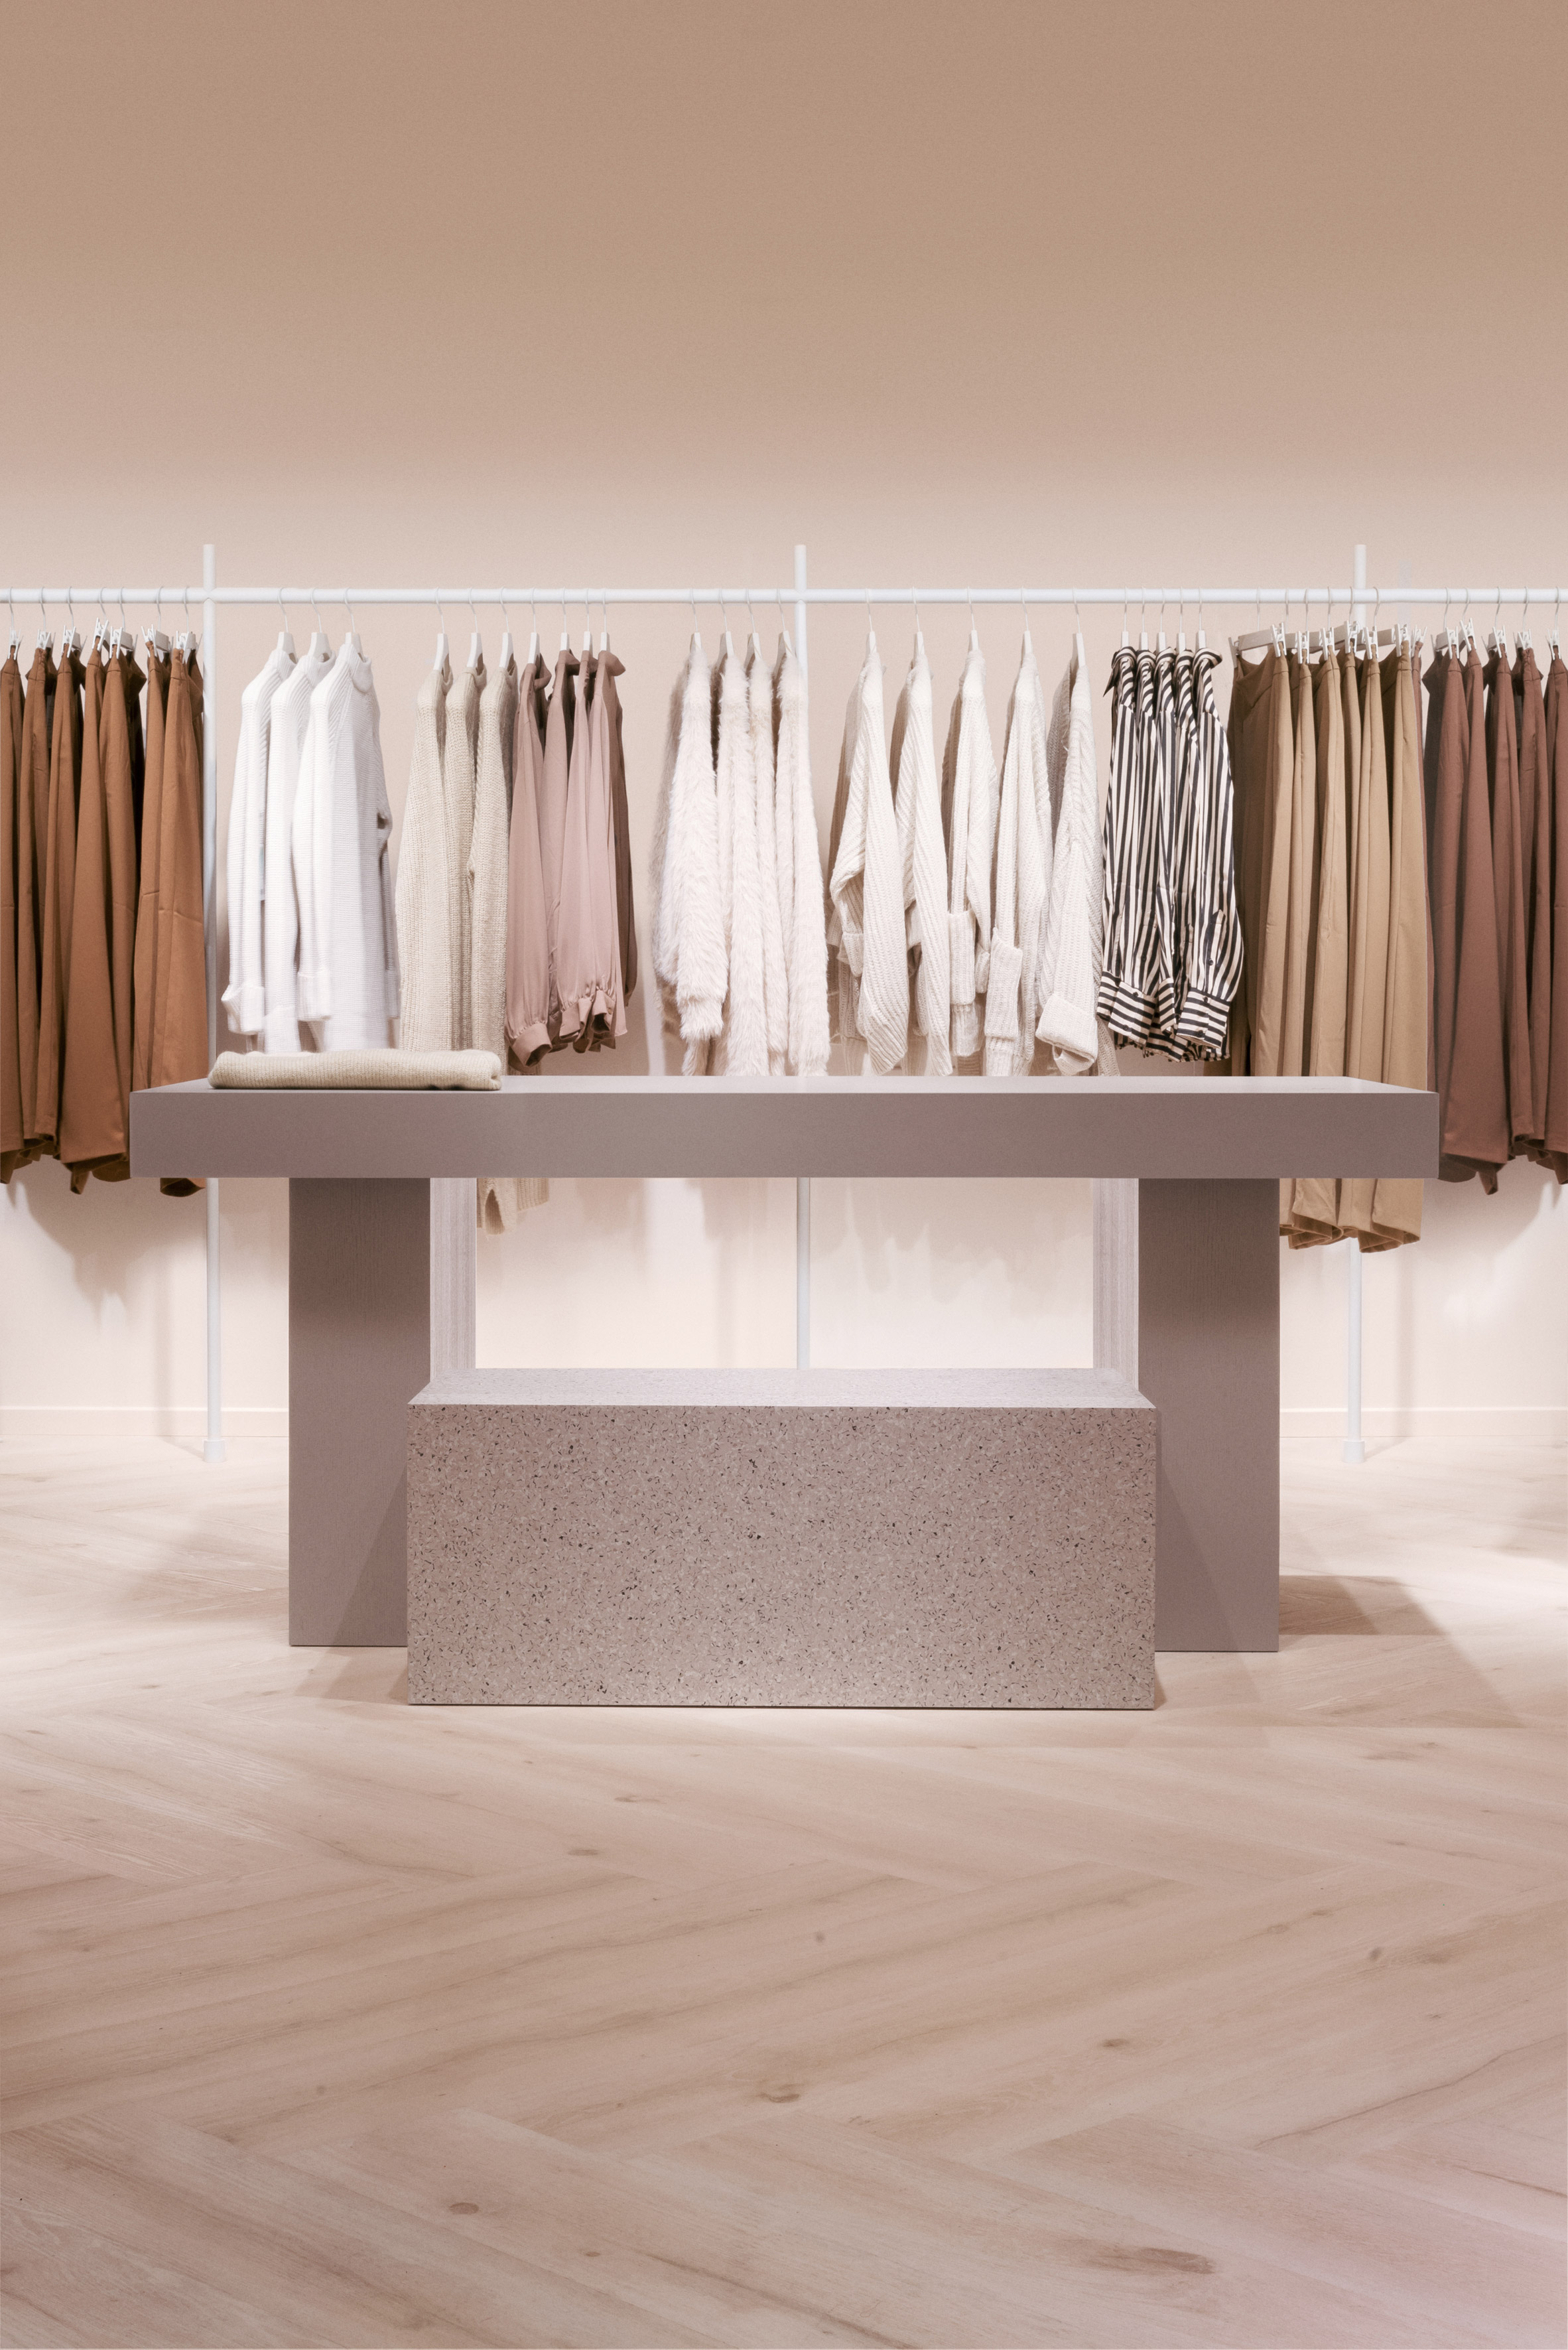 Interiors of Gina Tricot fashion store, designed by Note Design Studio and Open Studio